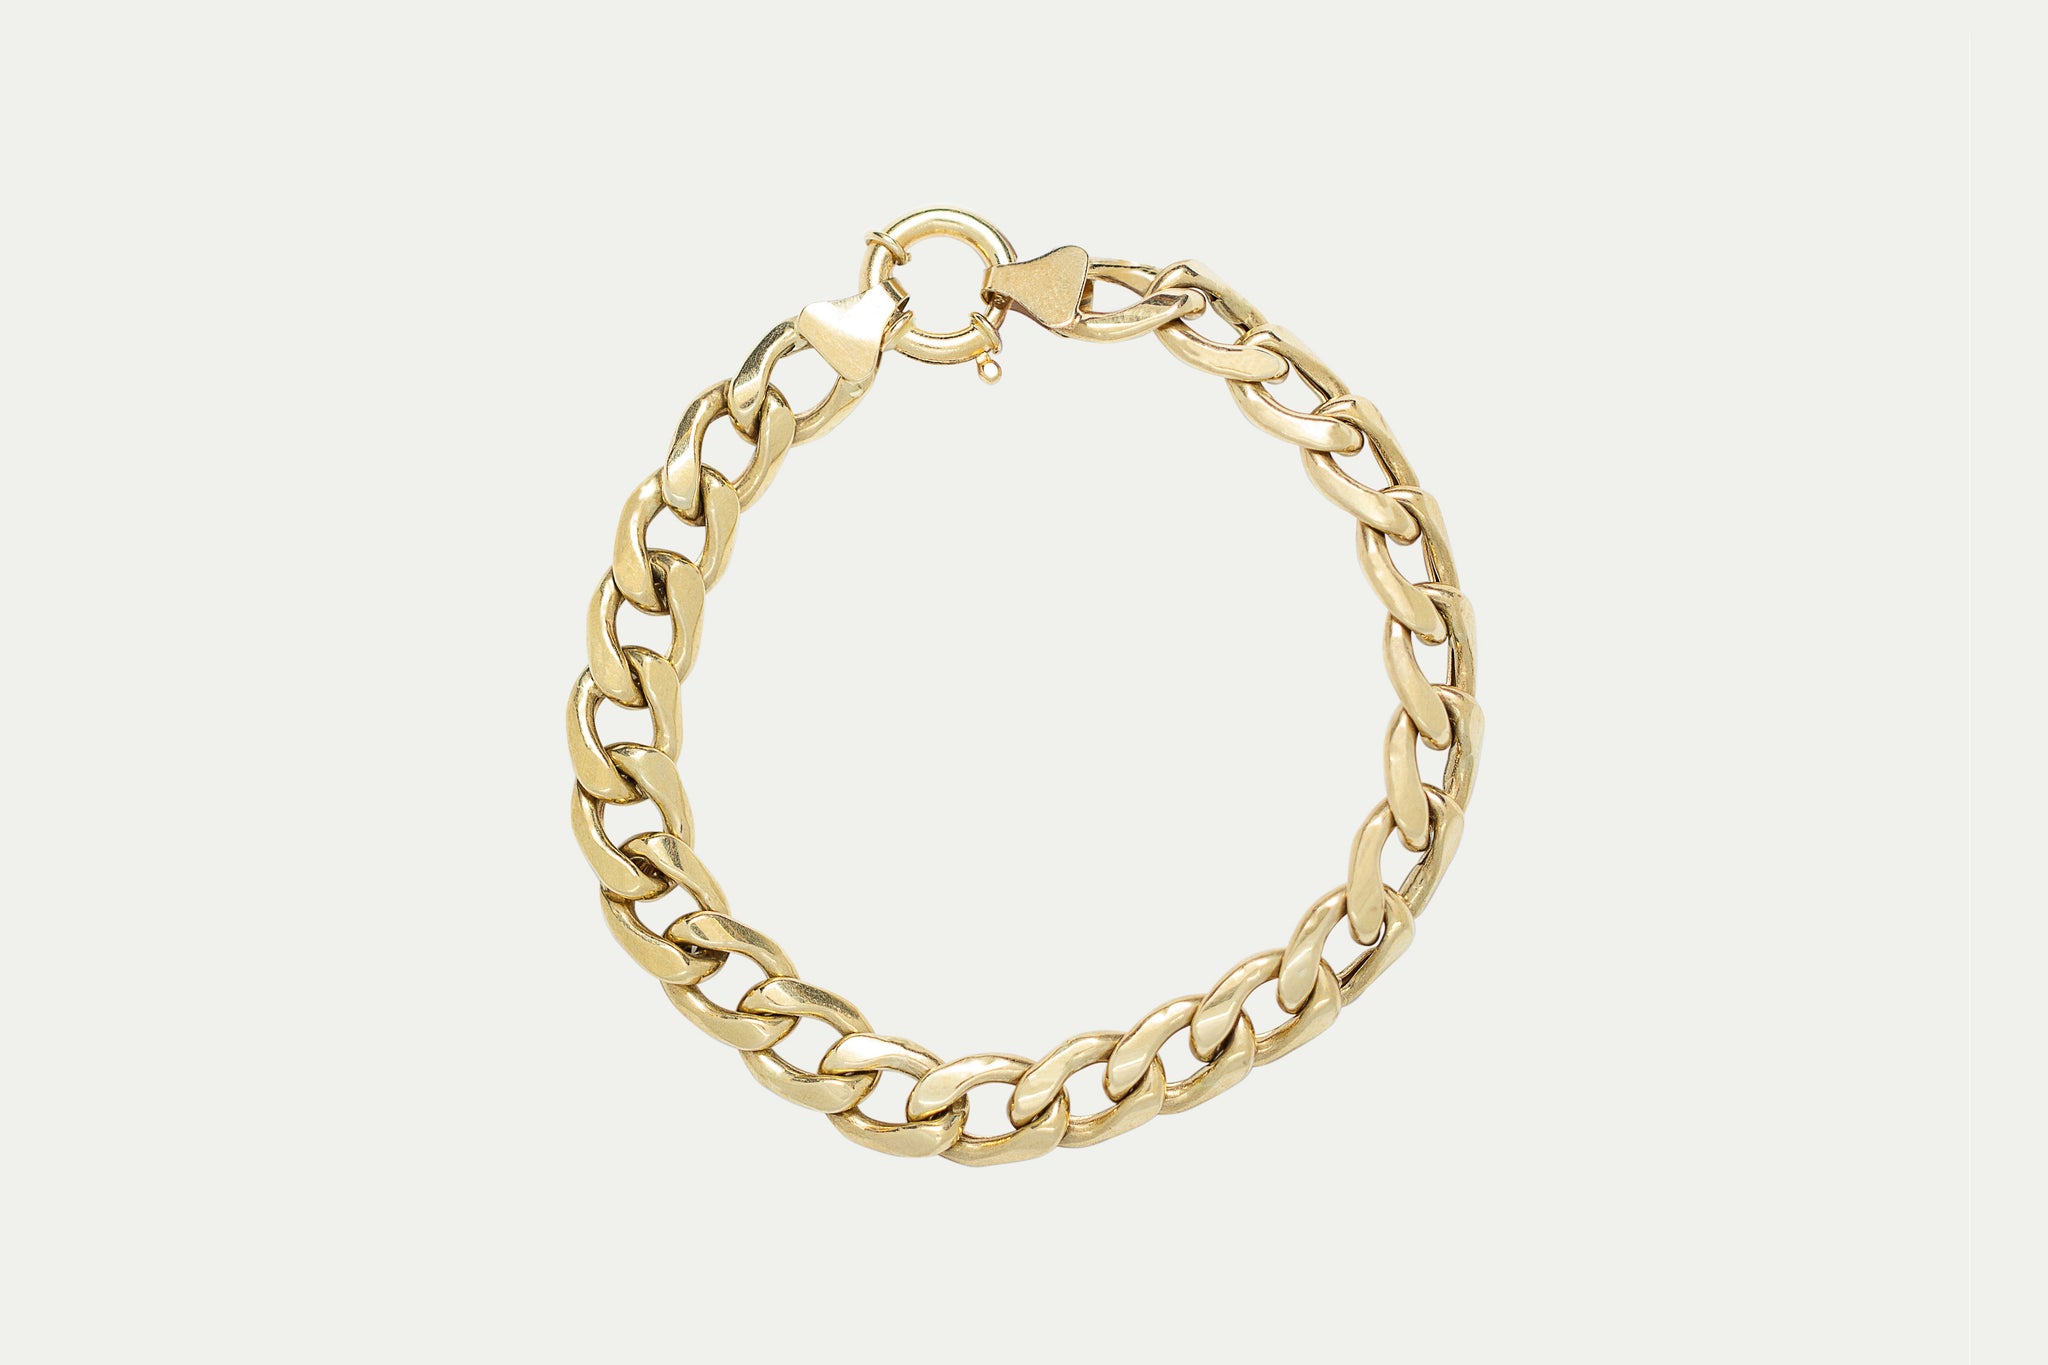 The Link Bracelet. 18K Gold. 19cm in length.